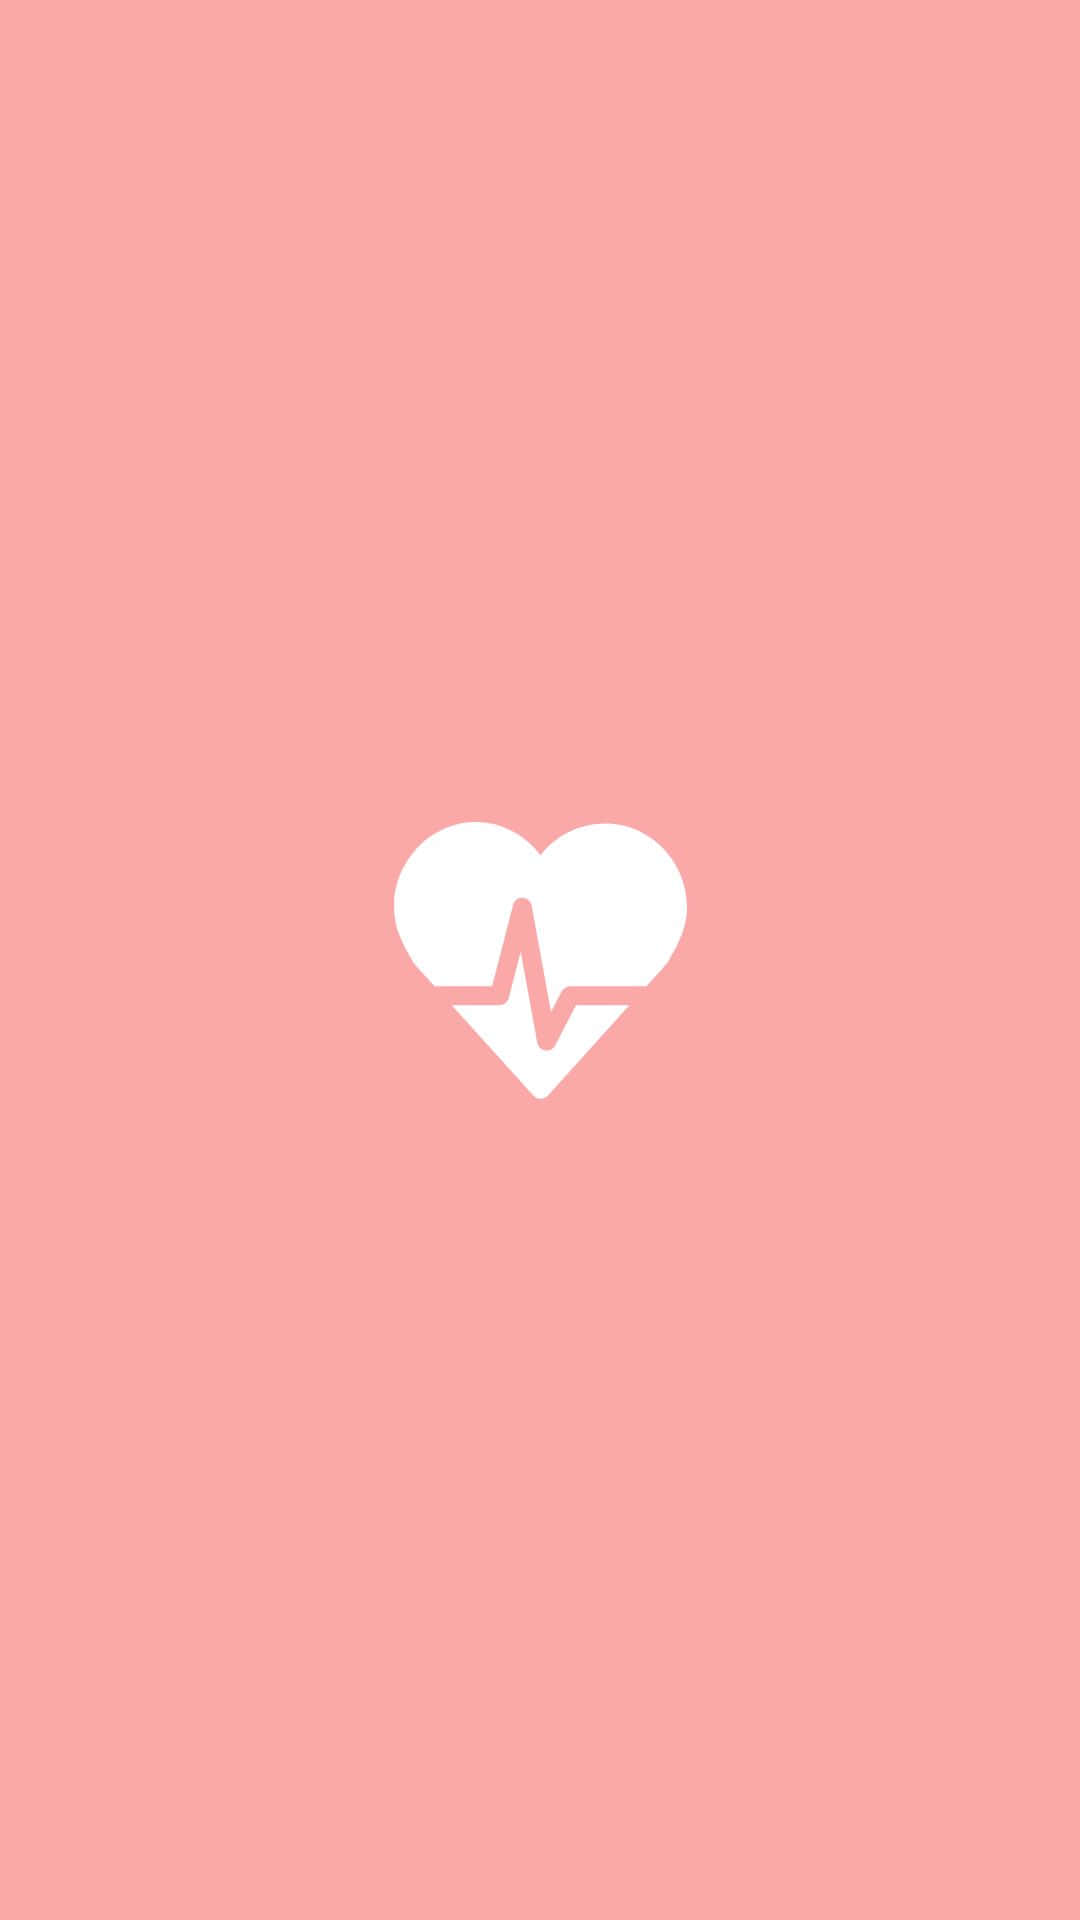 Heartbeat Symbolon Pink Background Wallpaper